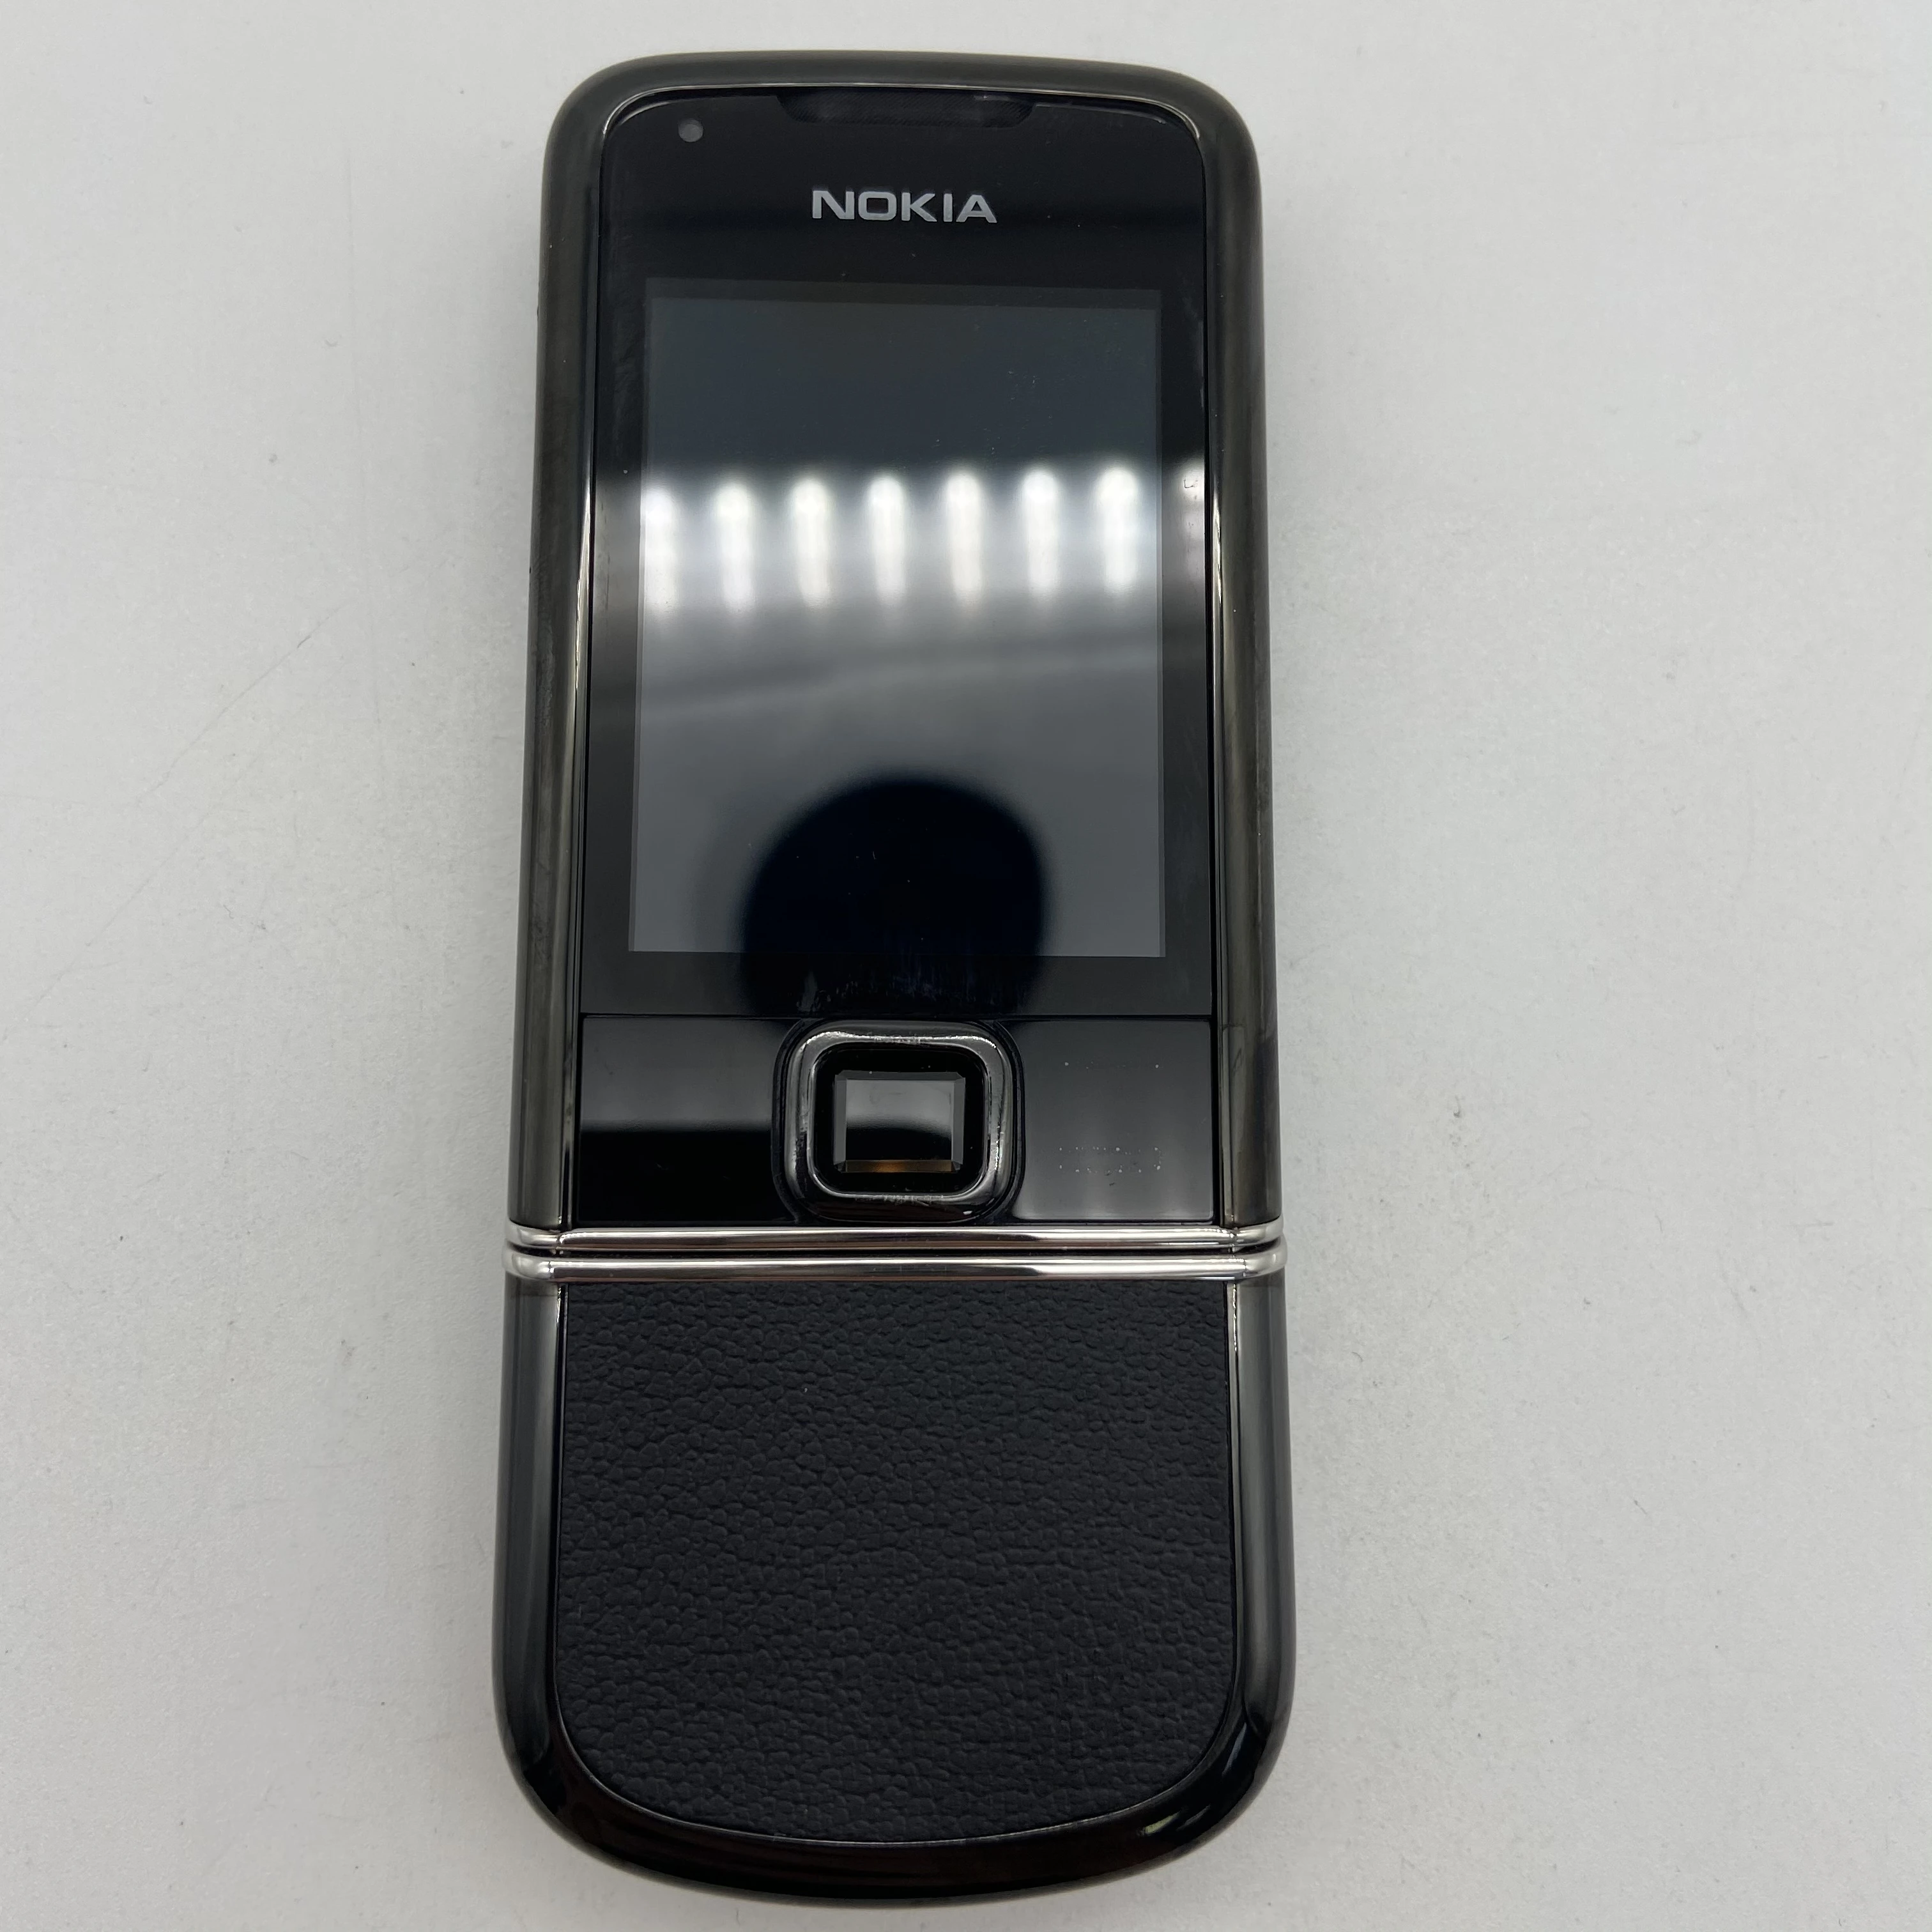 nokia 8800 gold arte refurbished original phones high quality unlocked 4g internal memory phone camera 3 15mp free ship free global shipping